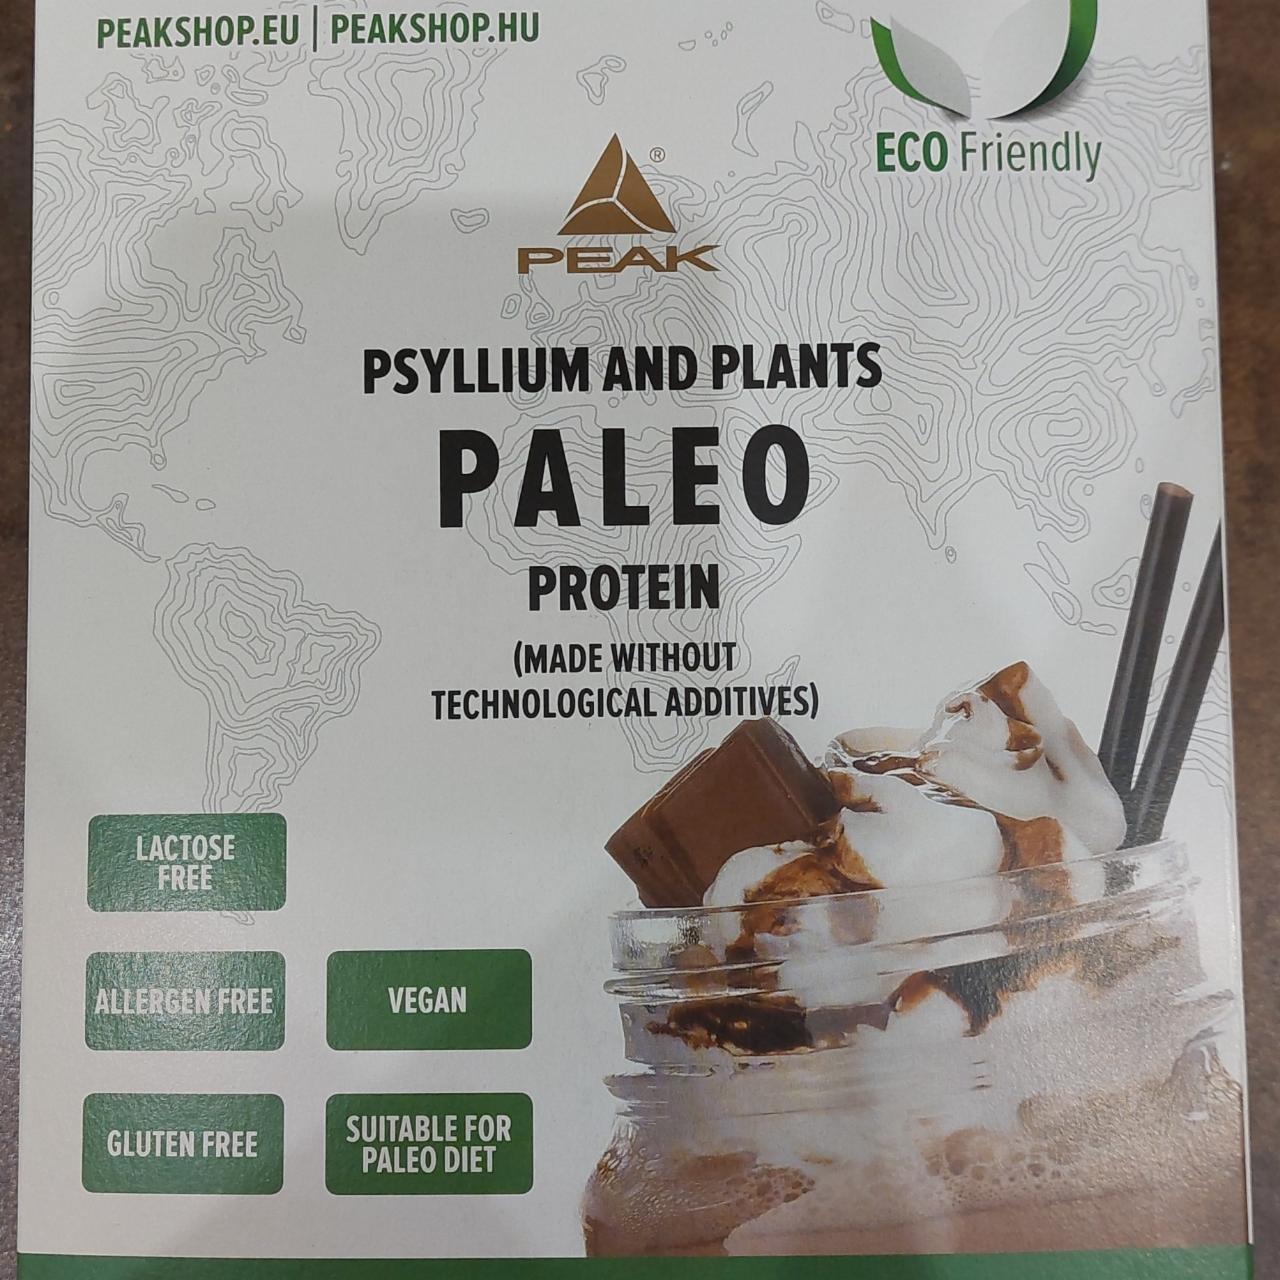 Képek - Psyllium and Plants Paleo Protein Peak